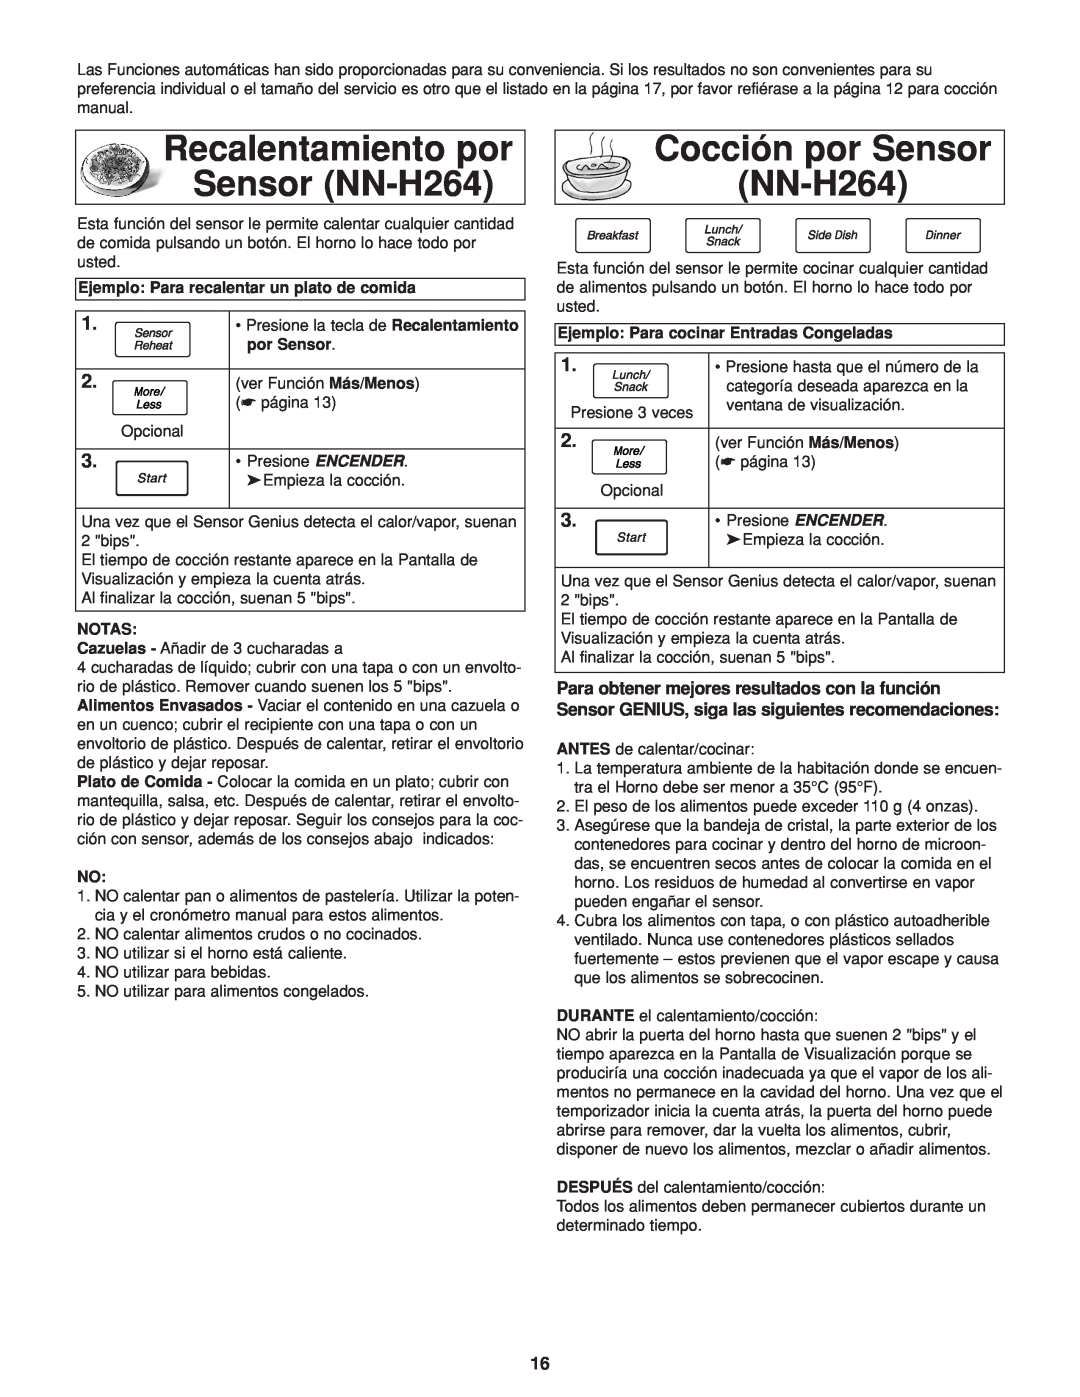 Panasonic important safety instructions Cocción por Sensor NN-H264, Recalentamiento por Sensor NN-H264 